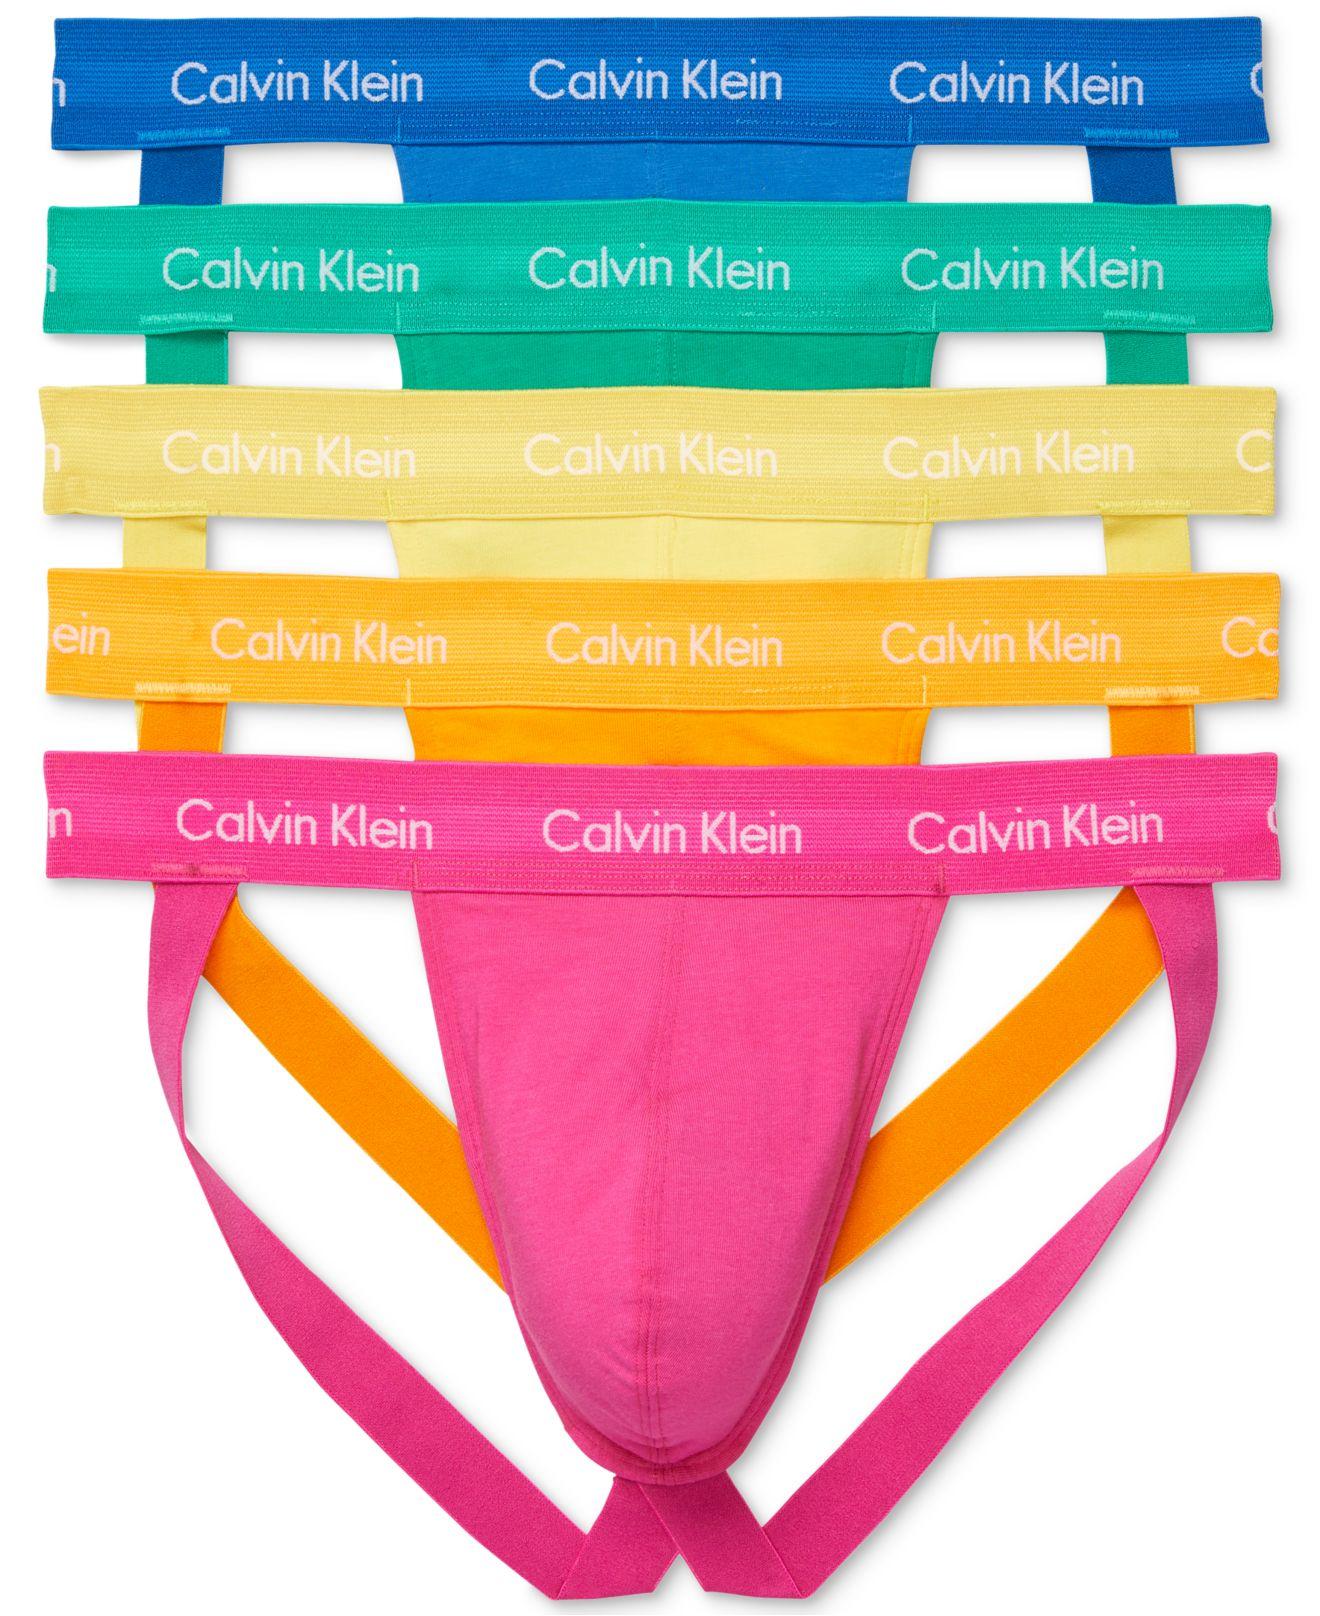 Calvin Klein Pride 5 Pack Stretch Jock Straps for Men | Lyst